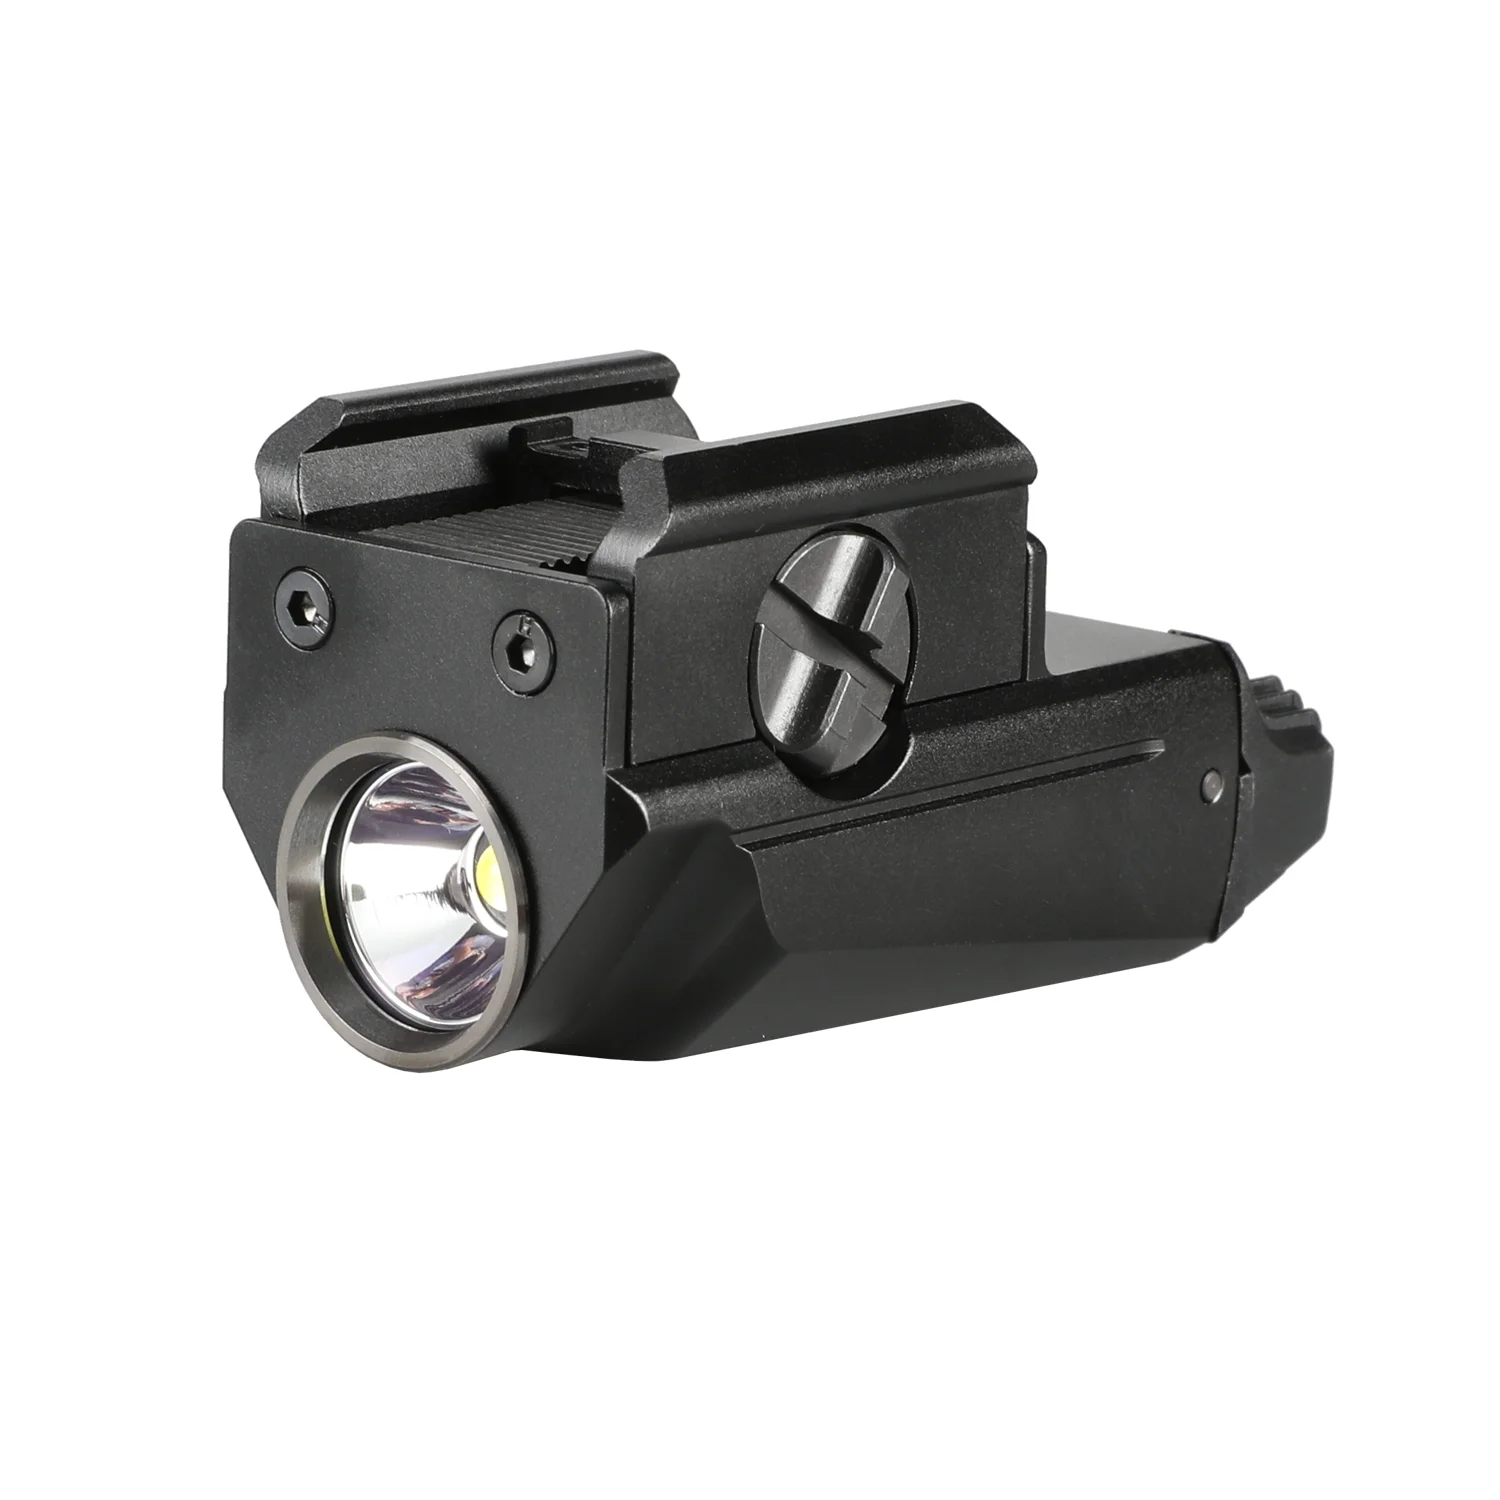 

Compact Tactical Real Weapon Gun Flashlight LED 600 Lumen Pistol Glock 17 19 Light sight For Rail Mount Hunting night scope, Black